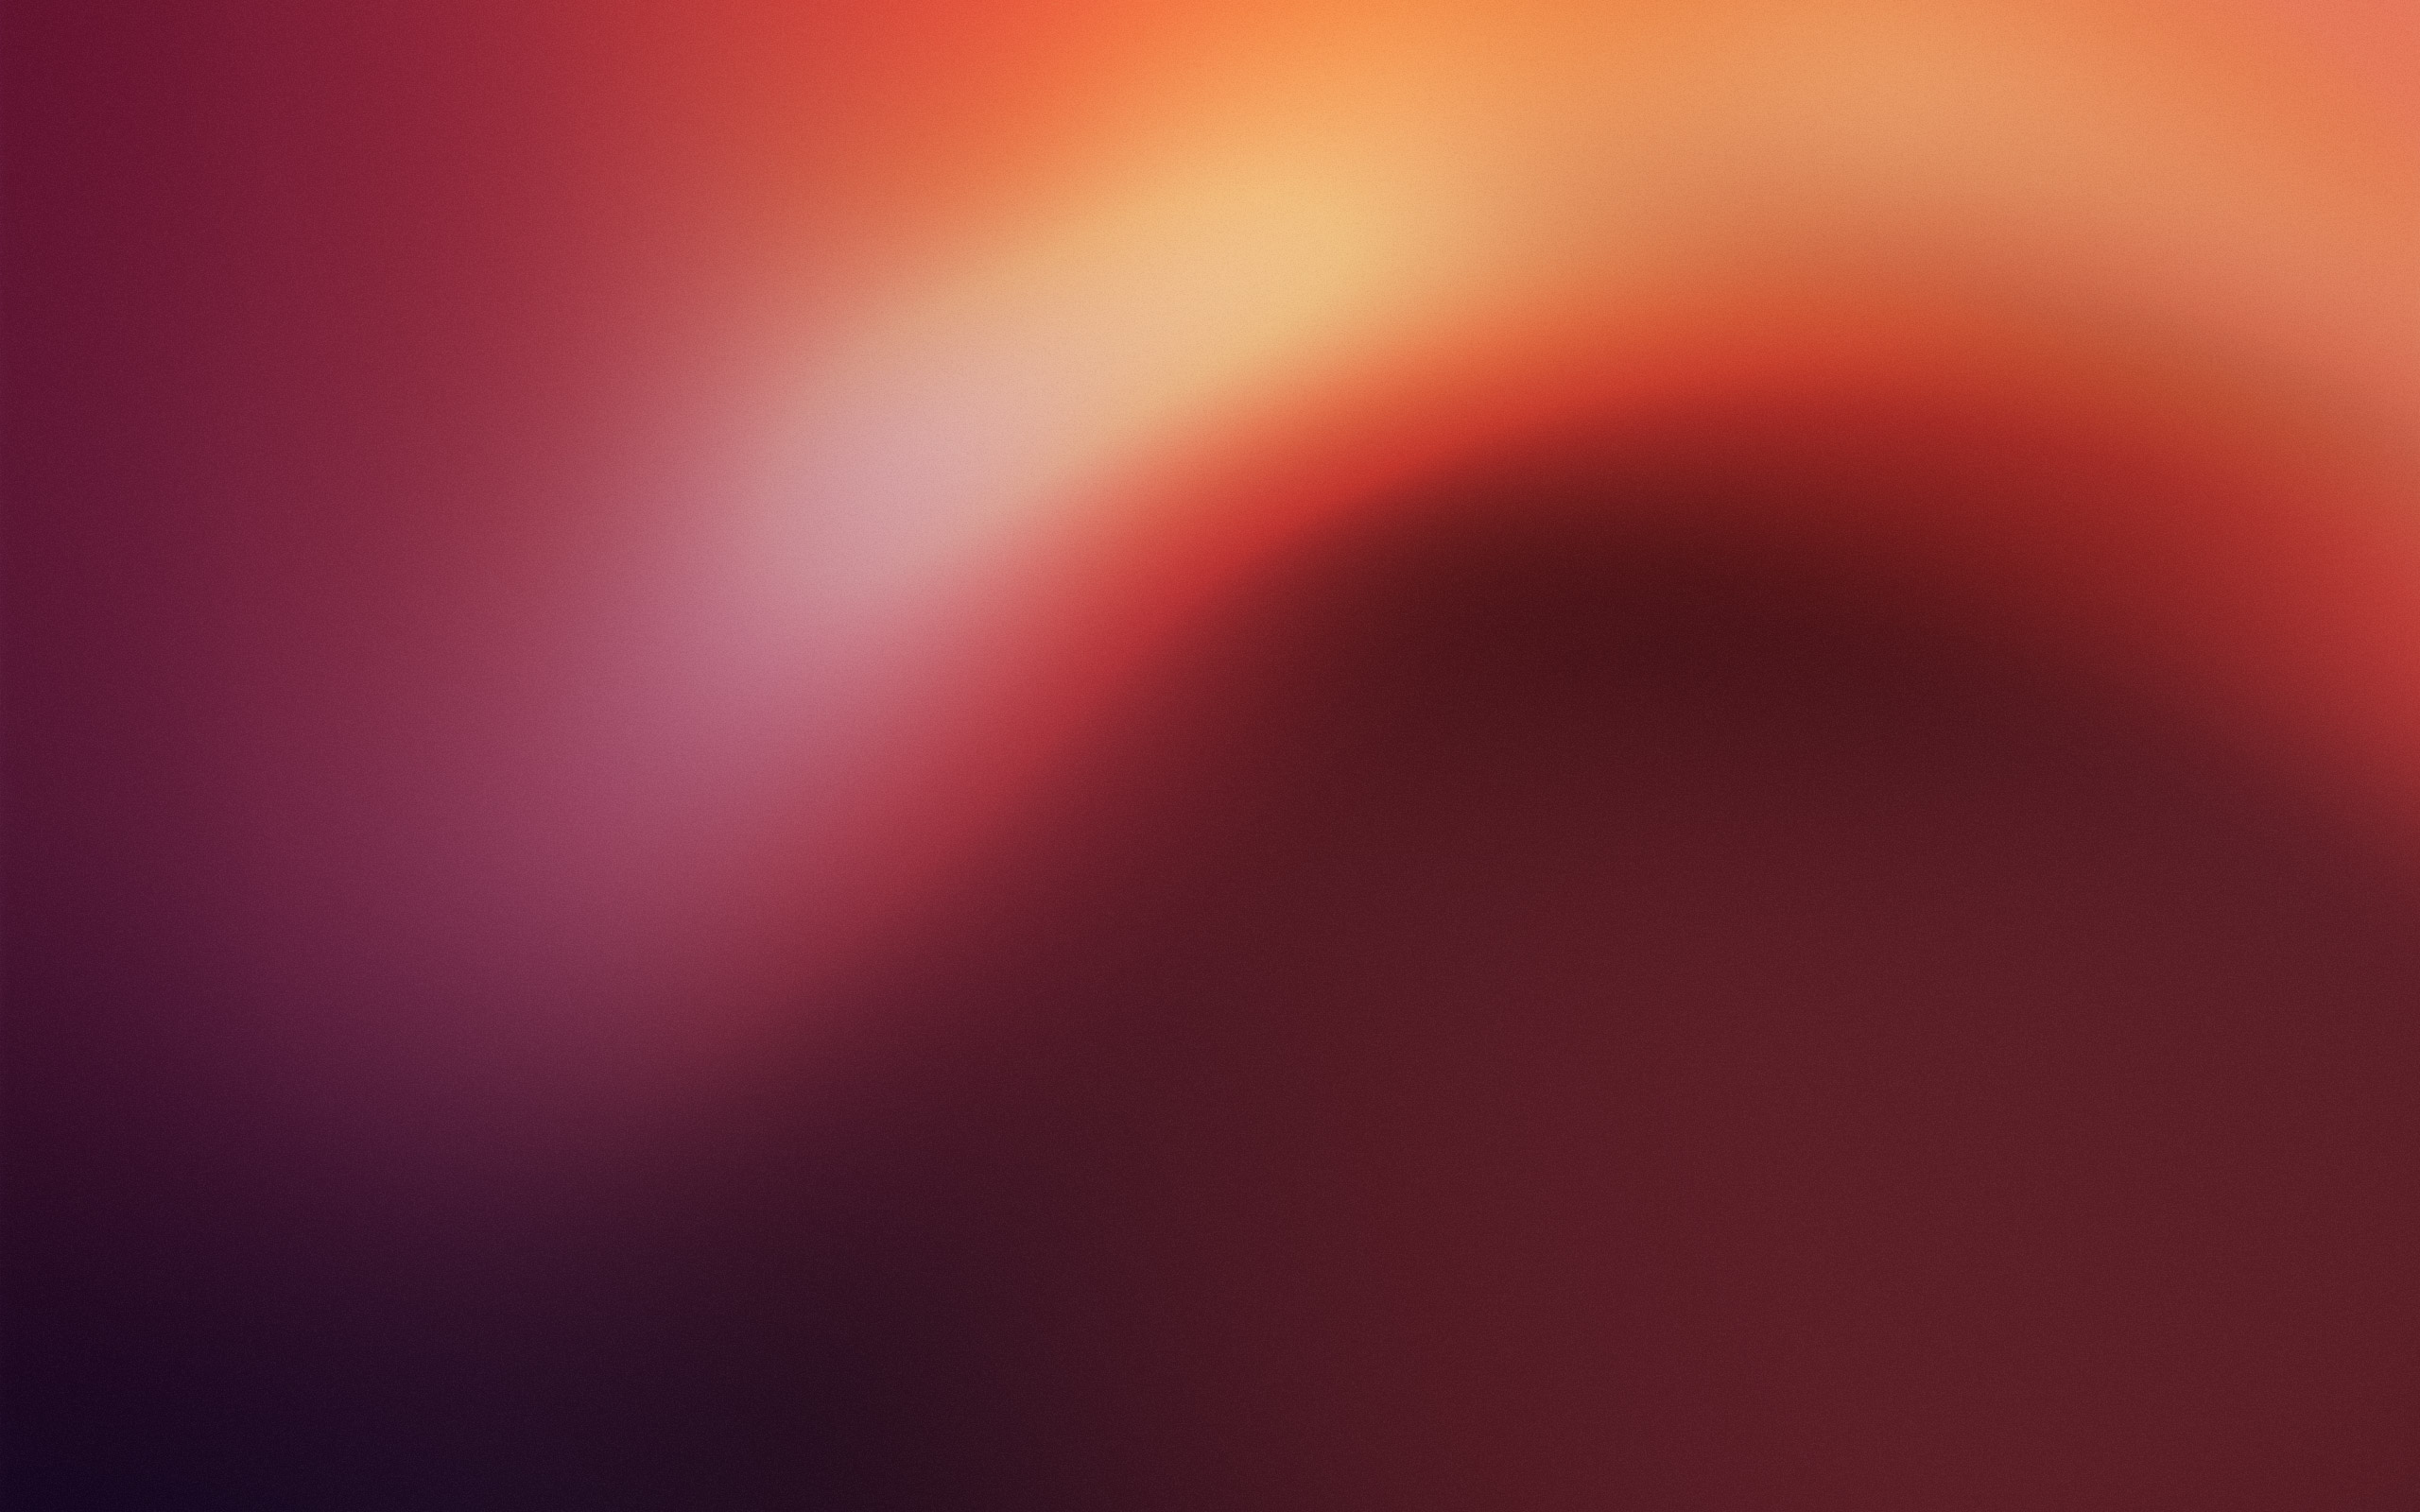 ubuntu wallpaper,rot,himmel,orange,rosa,licht